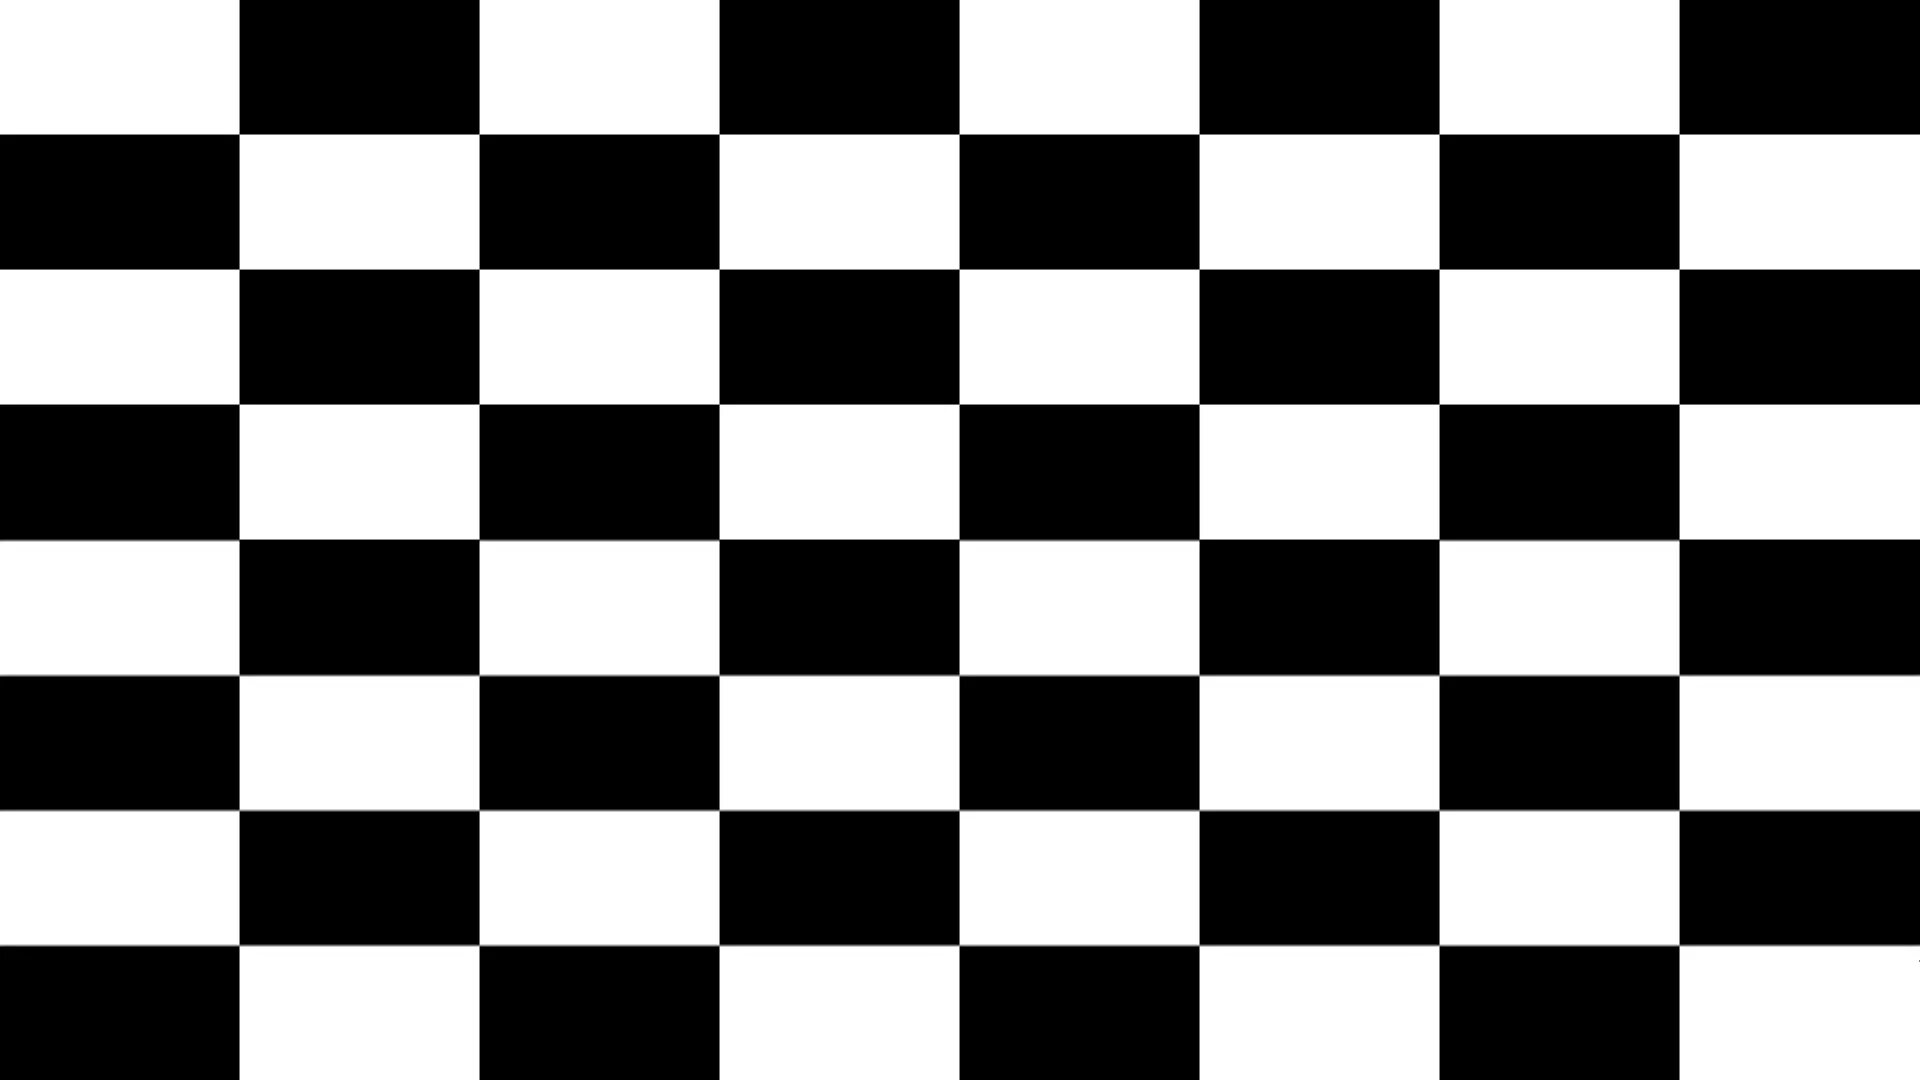 Шахматная доска черно белая. Черно белая доска для шахмат. Черно белые квадратики. Шахматная полоска.